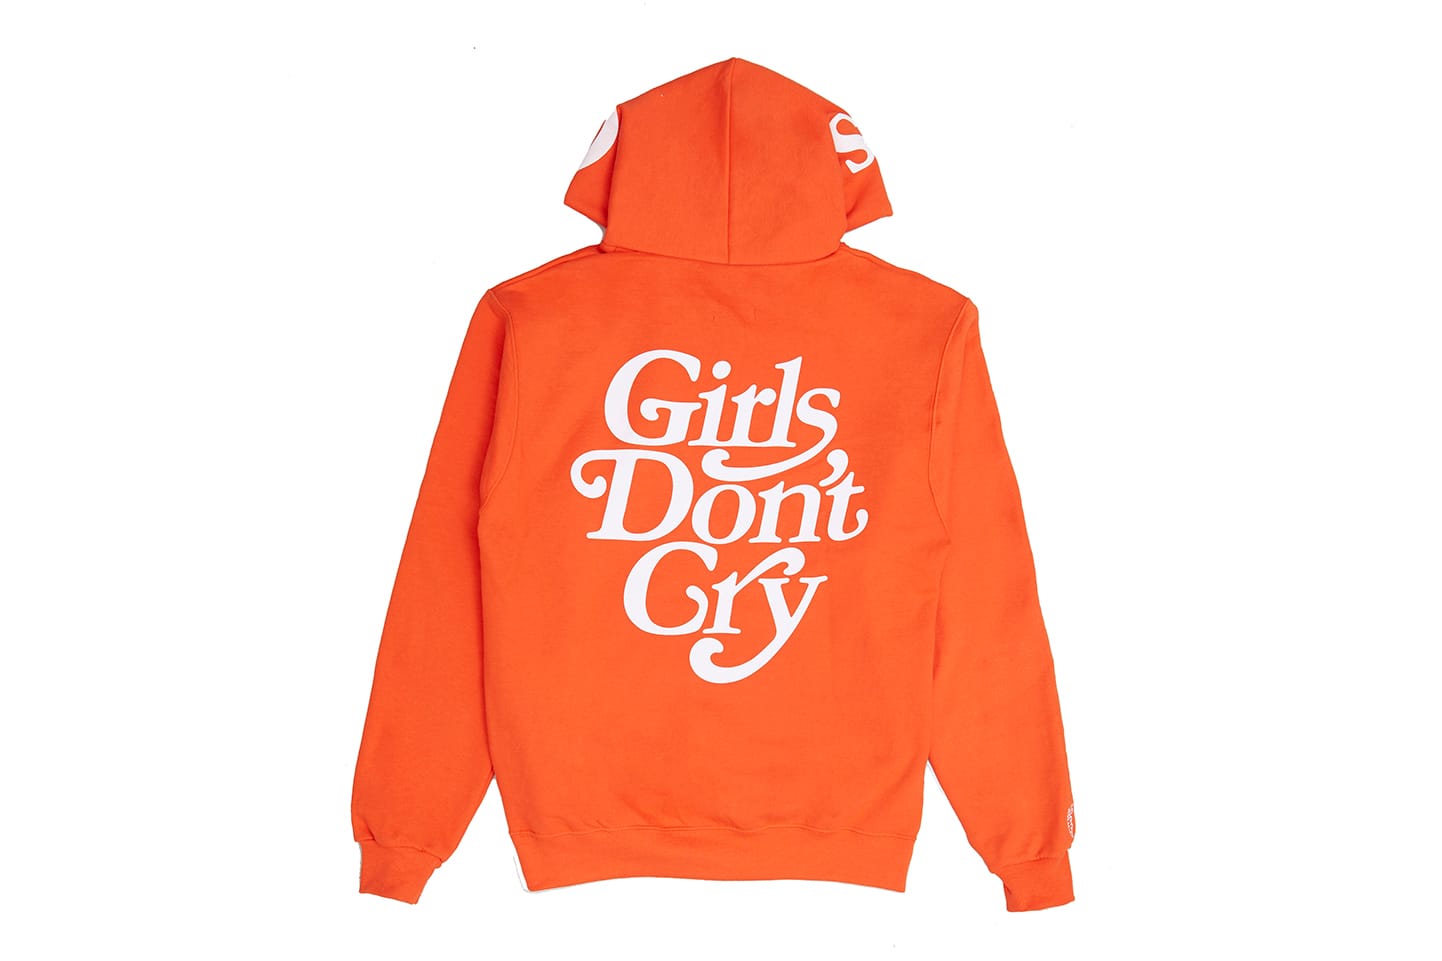 Girls Don't Cry x Carrots のコラボパーカがゲリラリリース決定